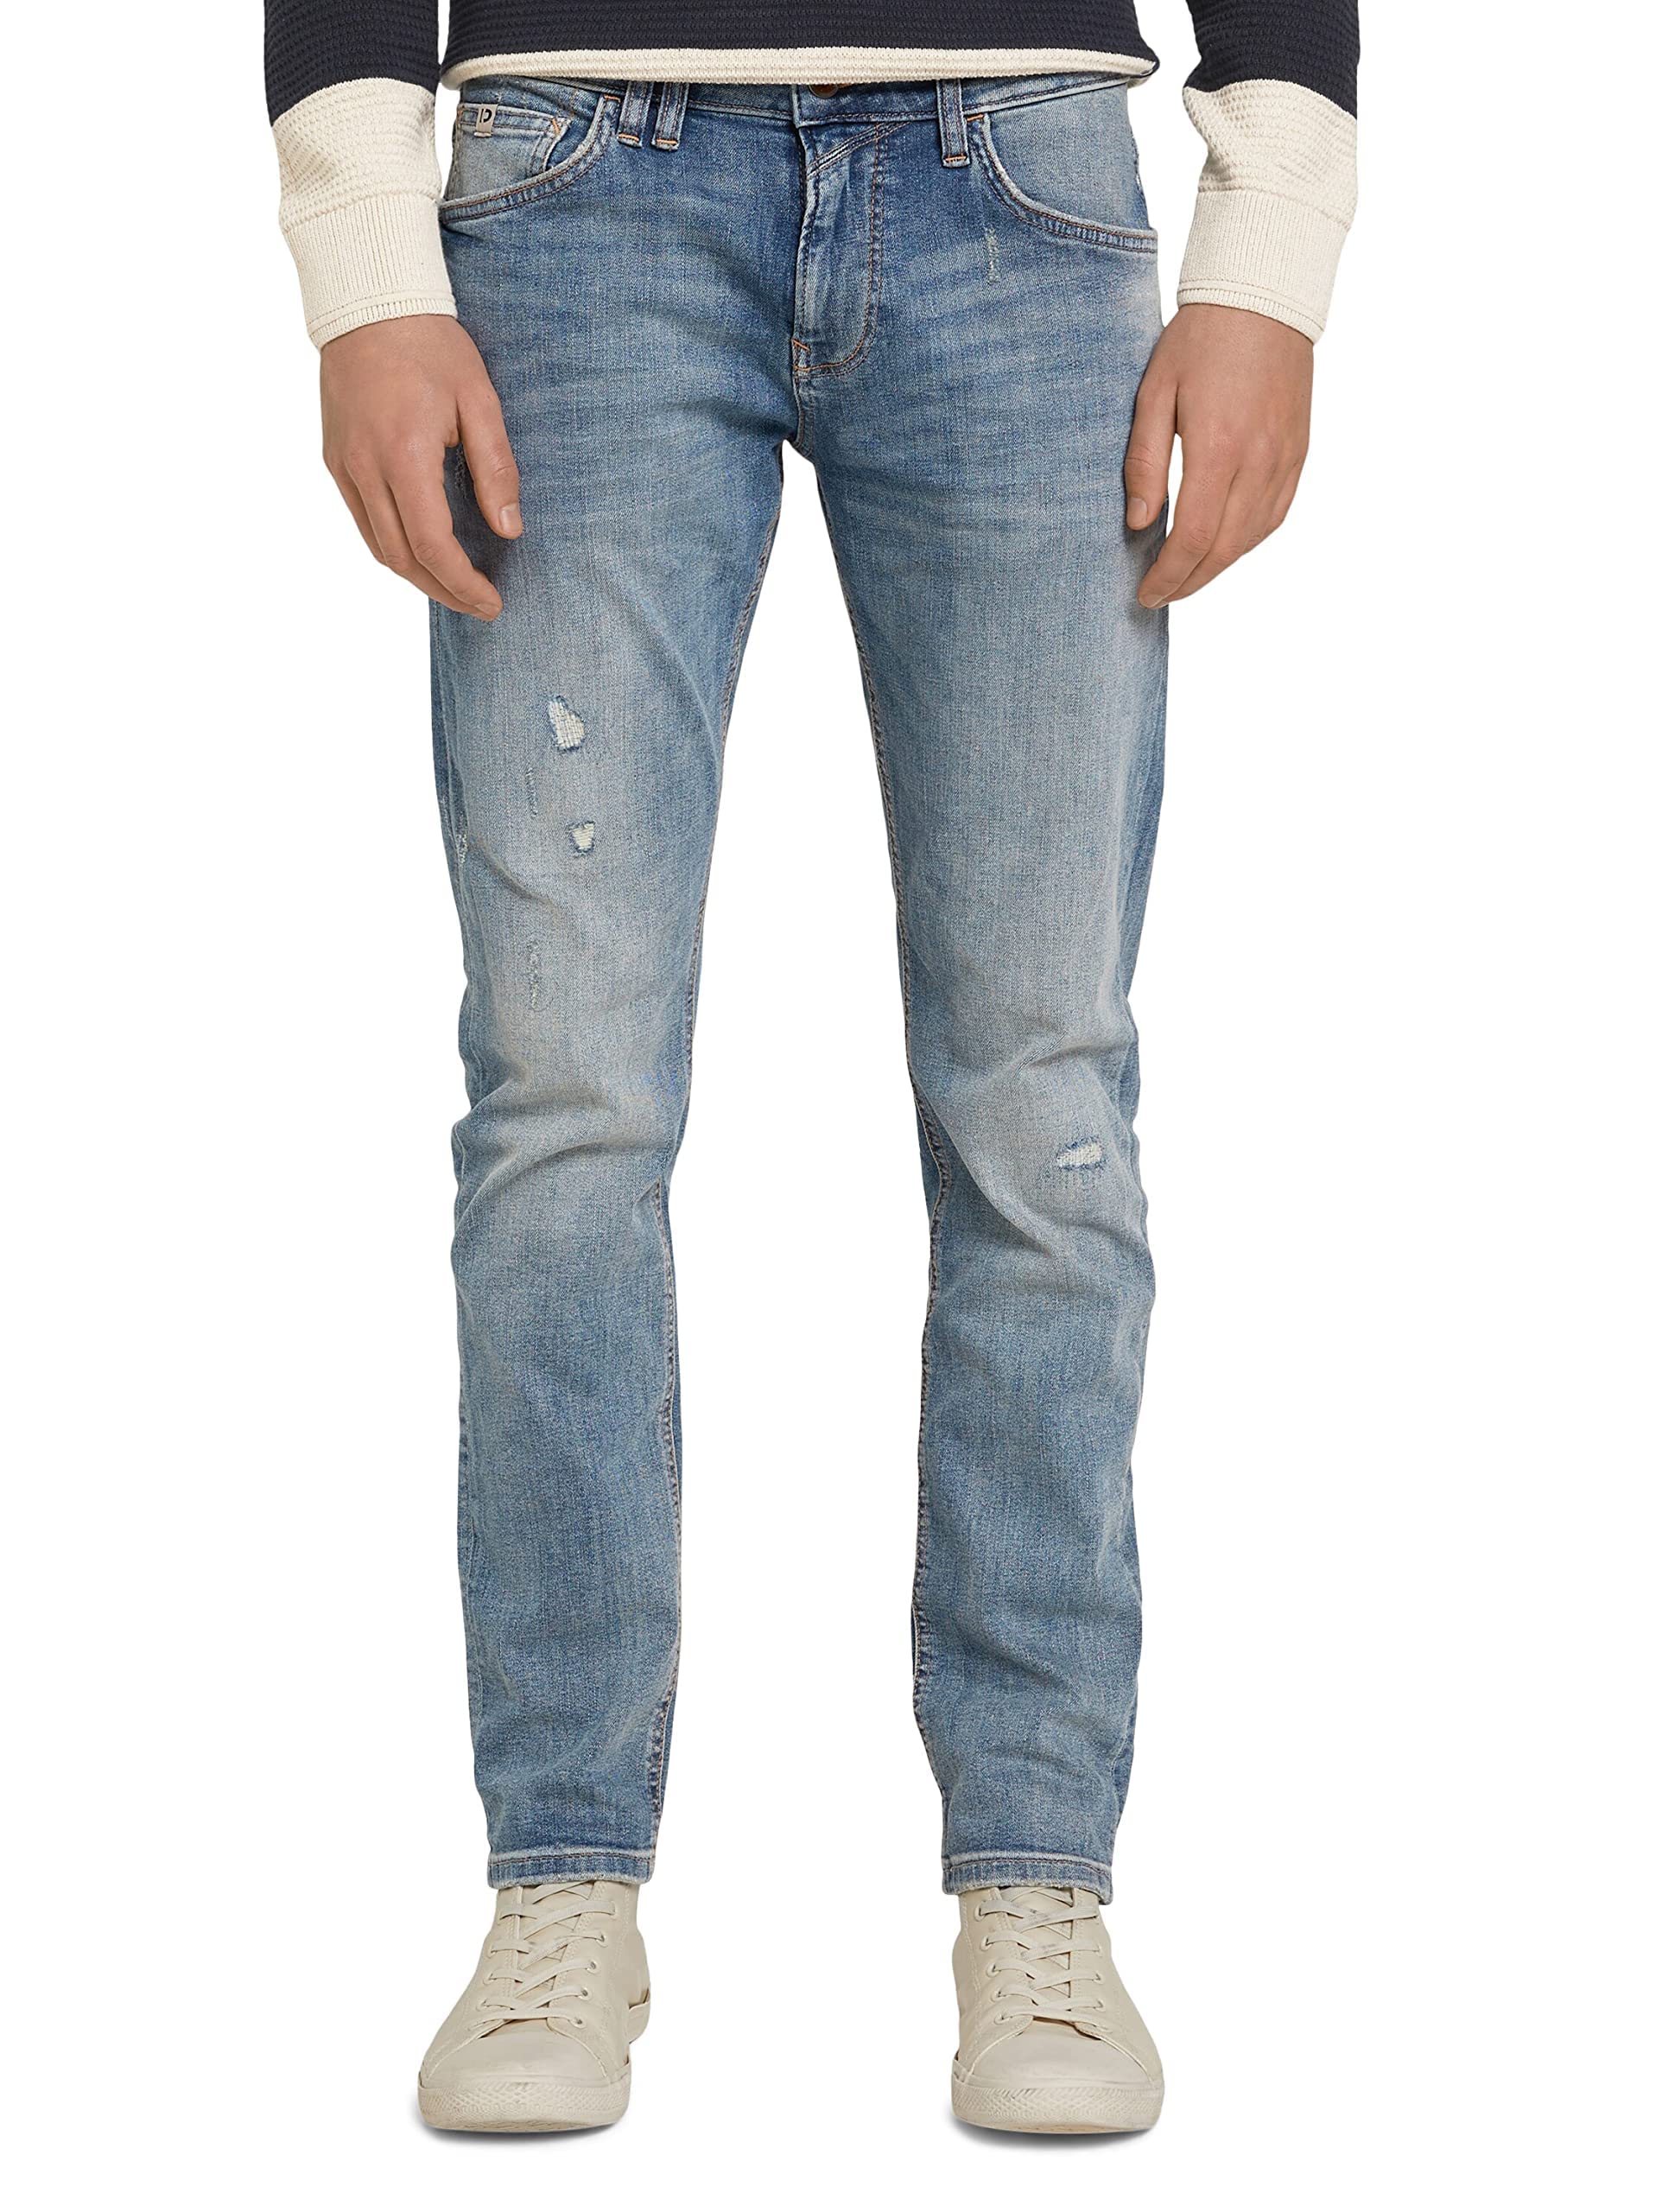 TOM TAILOR Denim Herren Piers Slim Jeans 1029730, 10118 - Used Light Stone Blue Denim, 30W / 34L